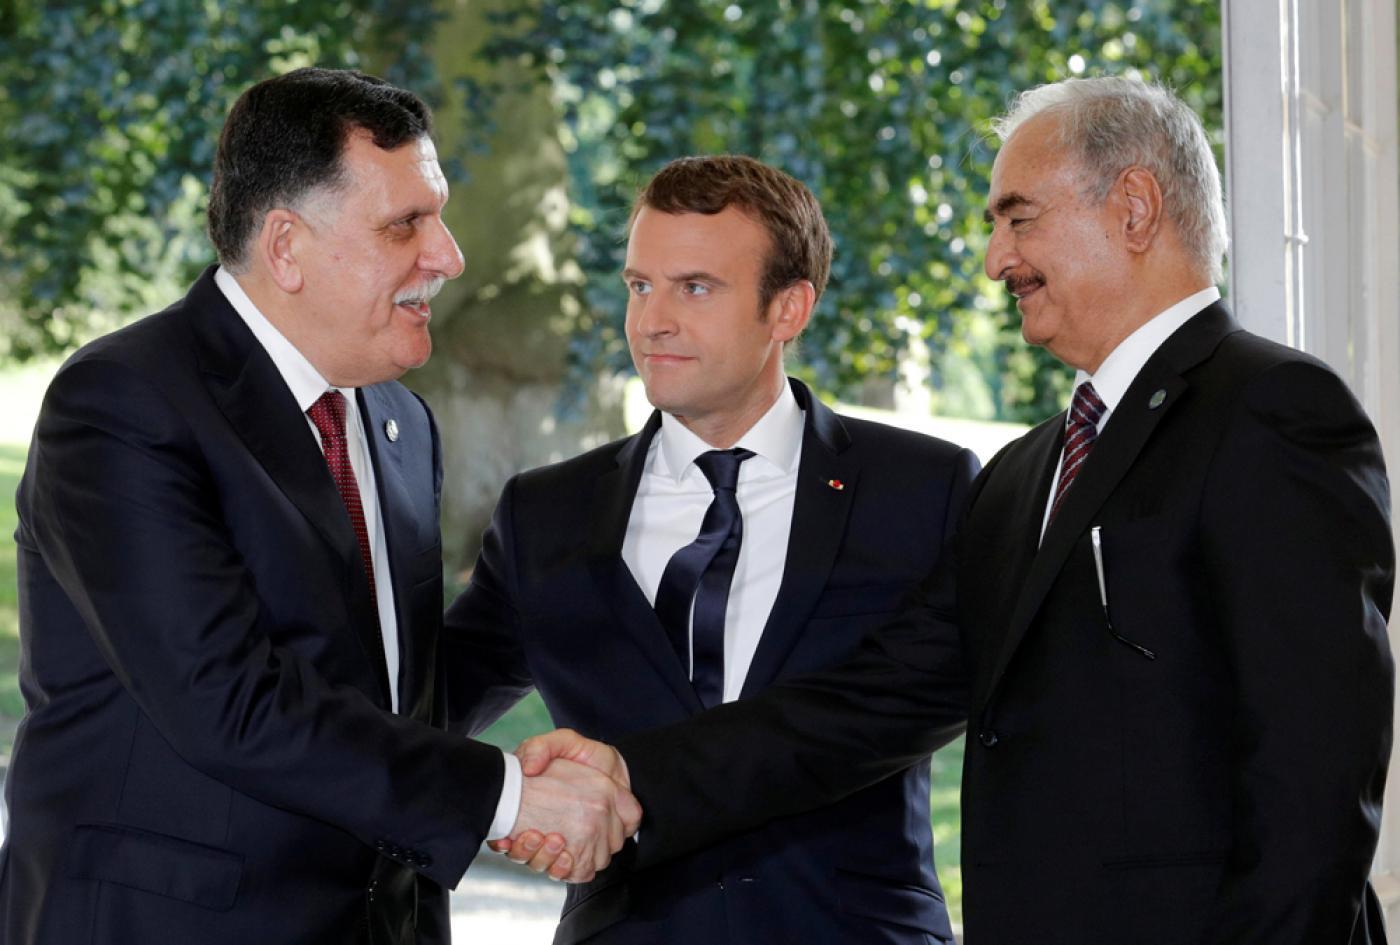 President Macron stands between Fayez Sarraj and Khalifa Haftar [Reuters]